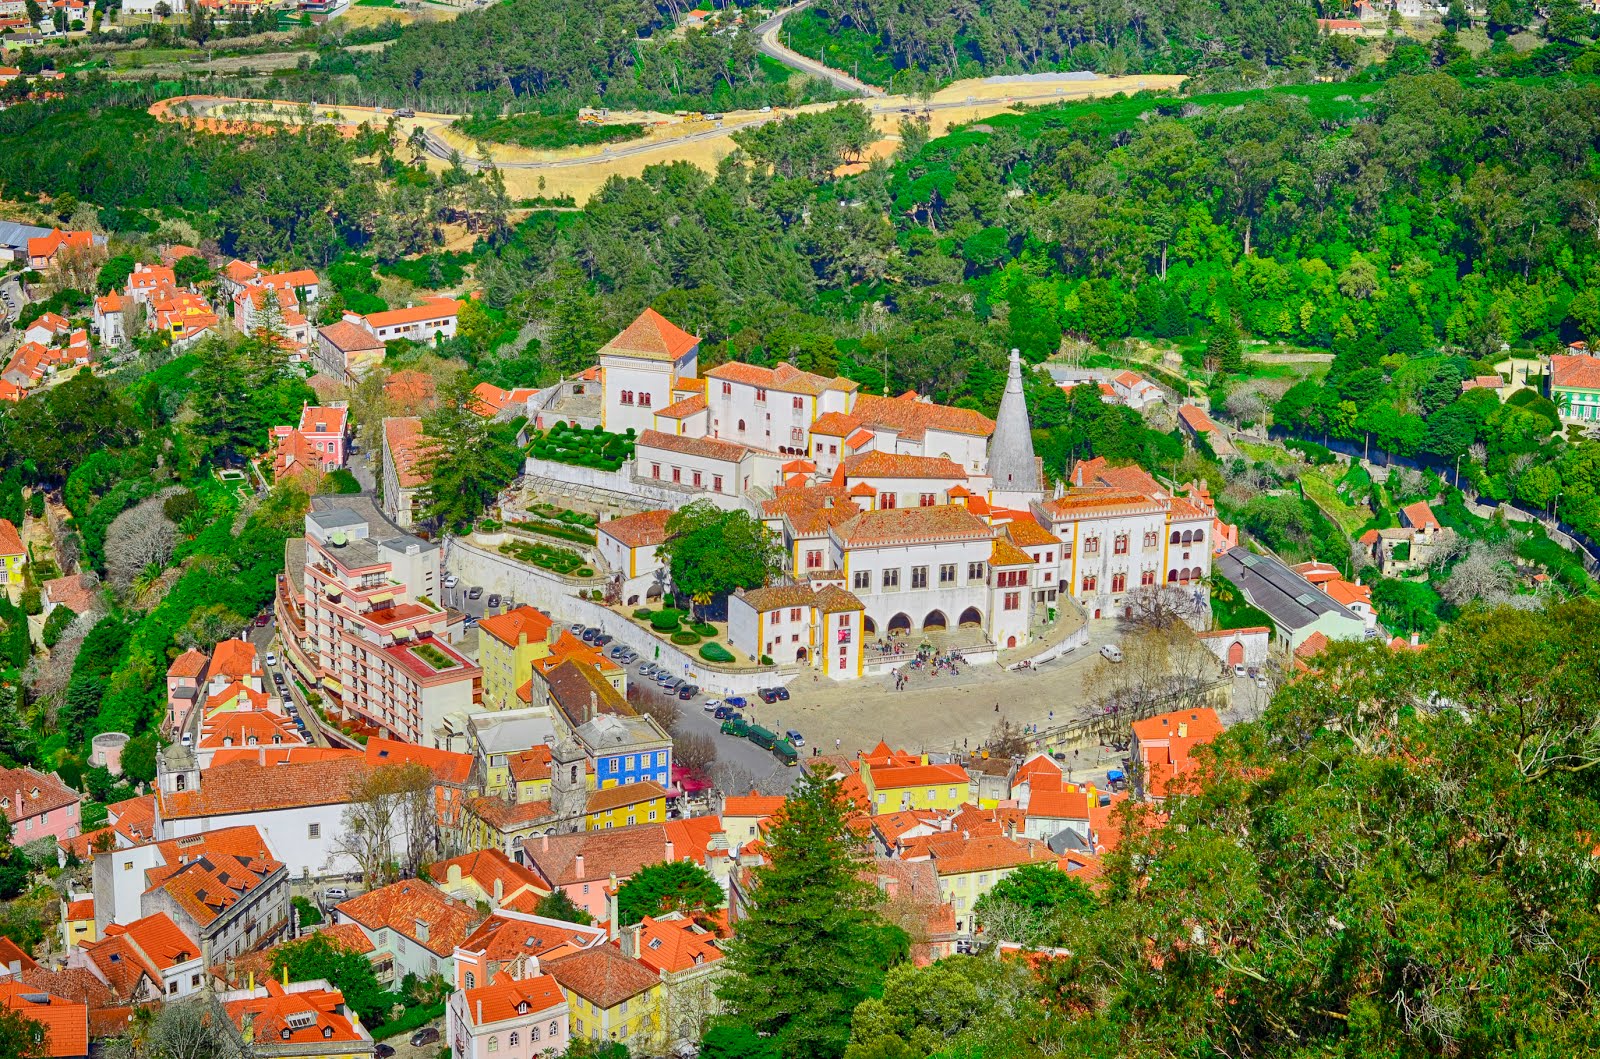 https://blogger.googleusercontent.com/img/b/R29vZ2xl/AVvXsEjbYkbocDu5b3B5cNGZ50E9q4ea4BO1T3t33eiIfZAhL9PkPy7NAv6a8k7DpVFc21KGNrdbKIMpO61pmgxHahupgnLBHg7eHzbb5y8Nm14CyH9tBGruKBaDi79Bk2n8-8YsHkIjY3XqA2w/s1600/Aerial+view+of+the+old+Sintra%252C+Portugal-vista-aerea-.jpg